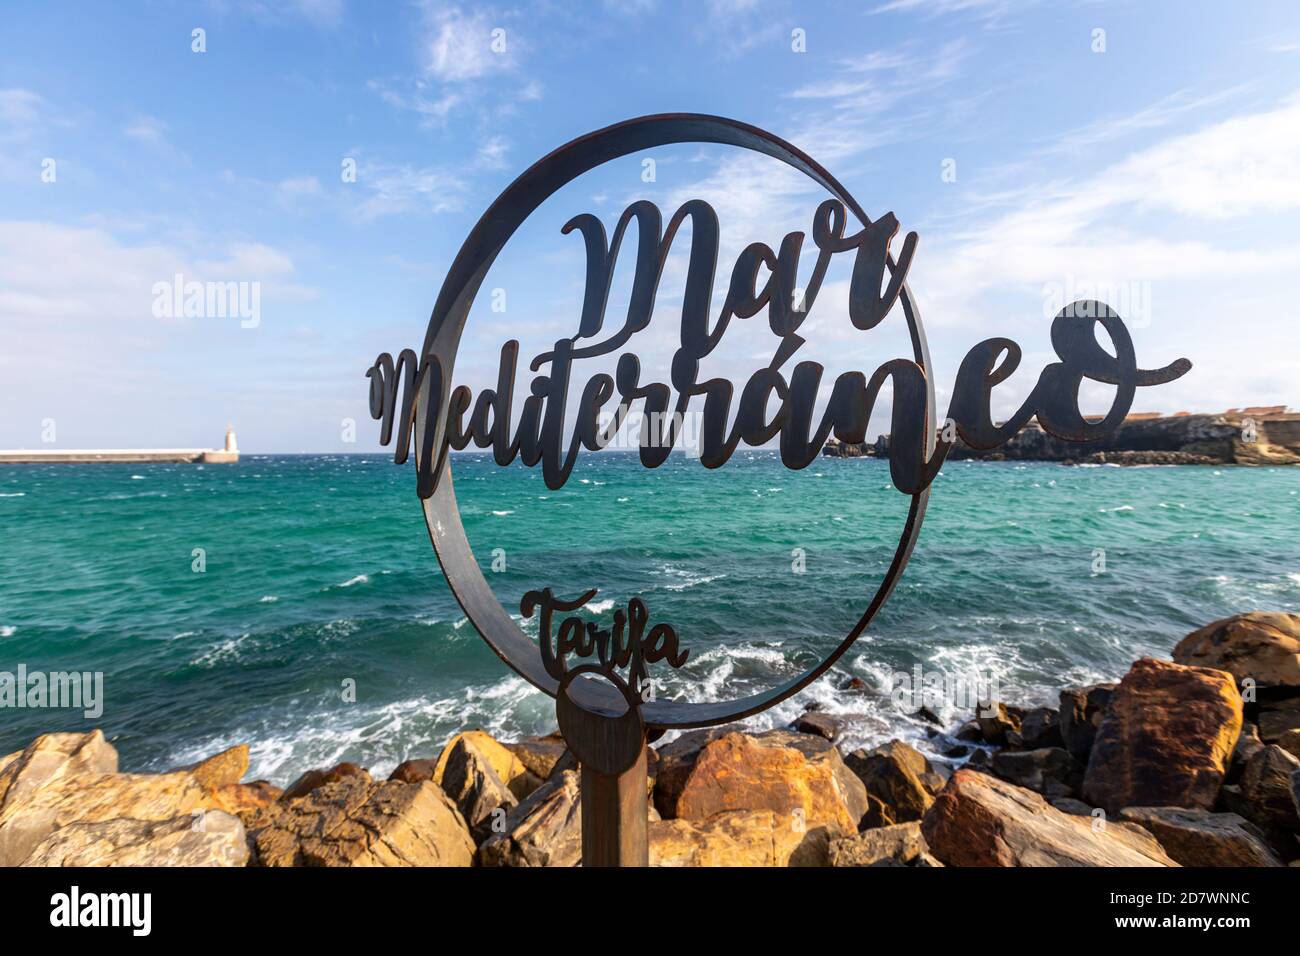 Mar Mediterráneo sign in Isla de las Palomas, Tarifa, province of Cádiz, Andalusia, Spain Stock Photo